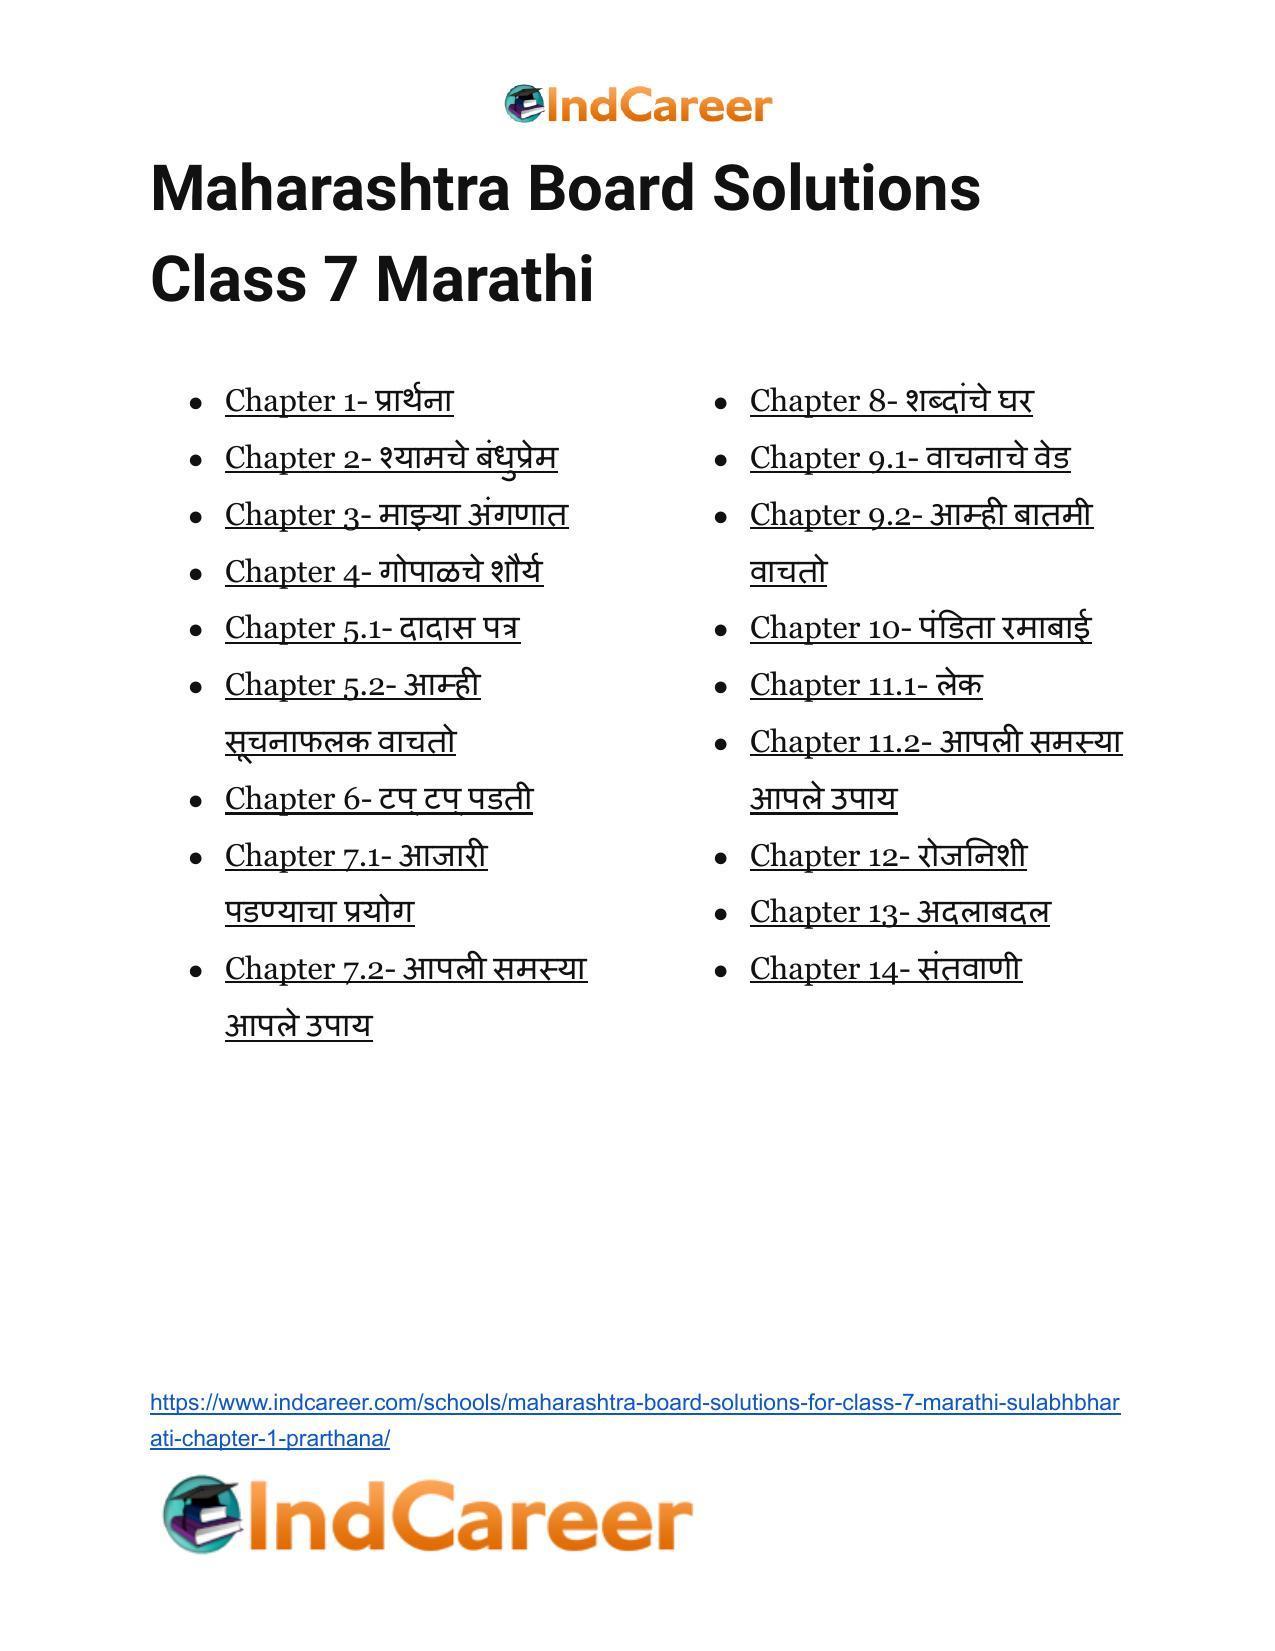 Maharashtra Board Solutions for Class 7- Marathi Sulabhbharati: Chapter 1- प्रार्थना - Page 9